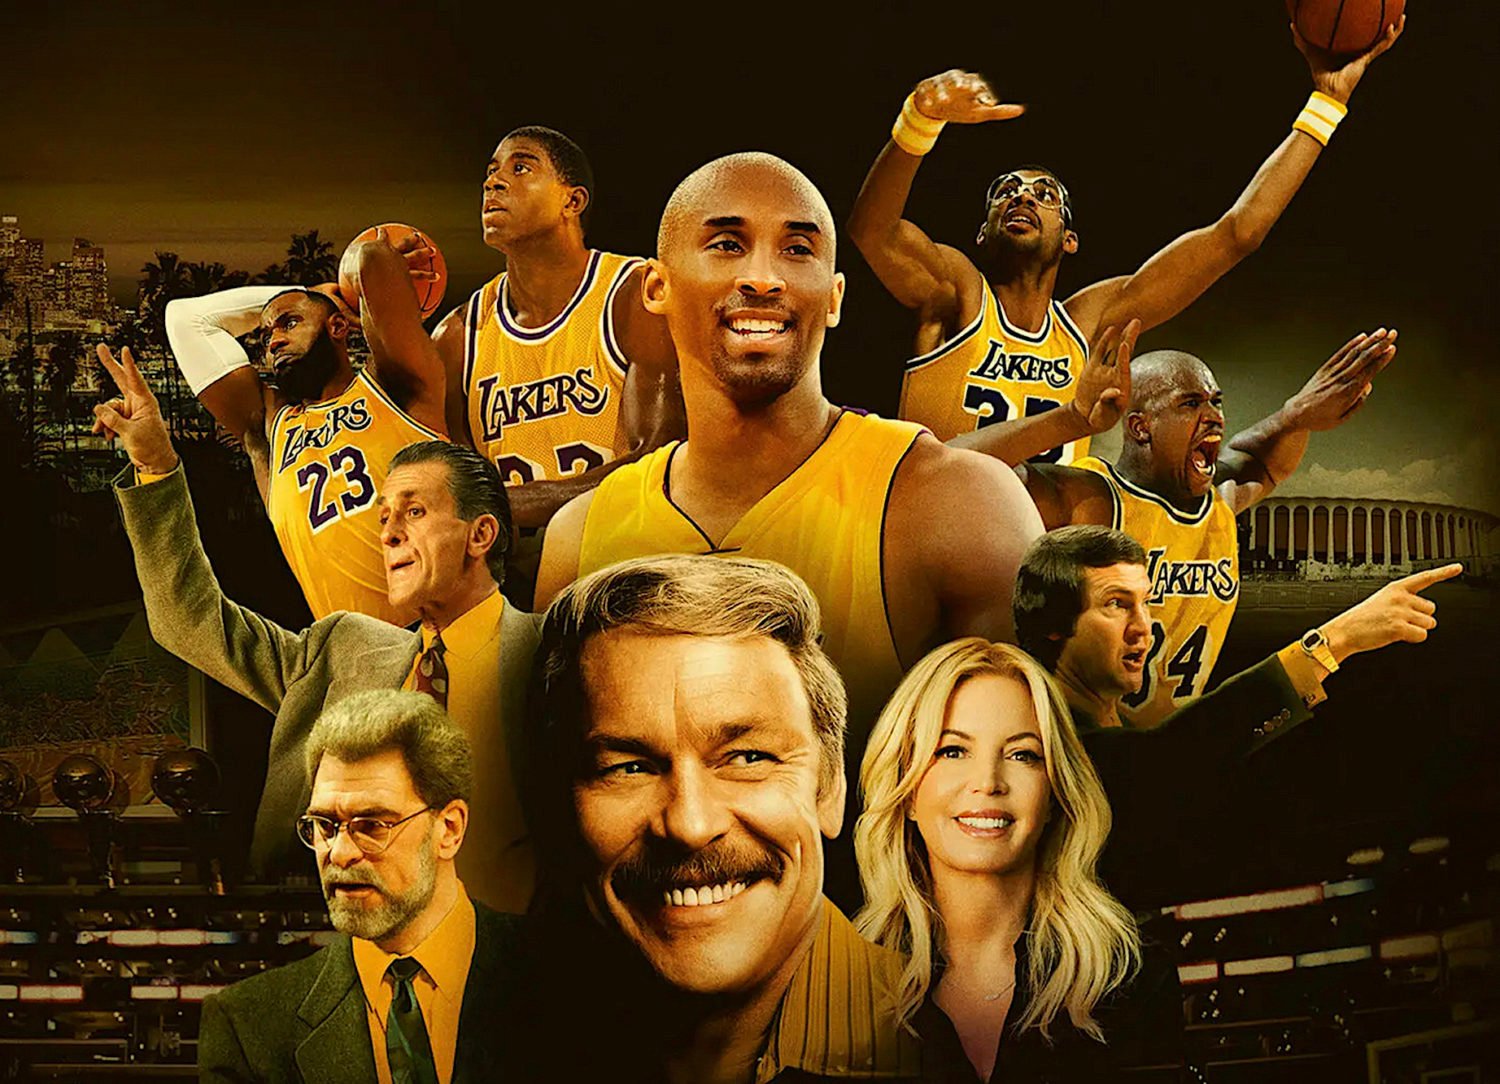 Legacy Hulus new Lakers Series Takes its Shot at Teams Mythic Story